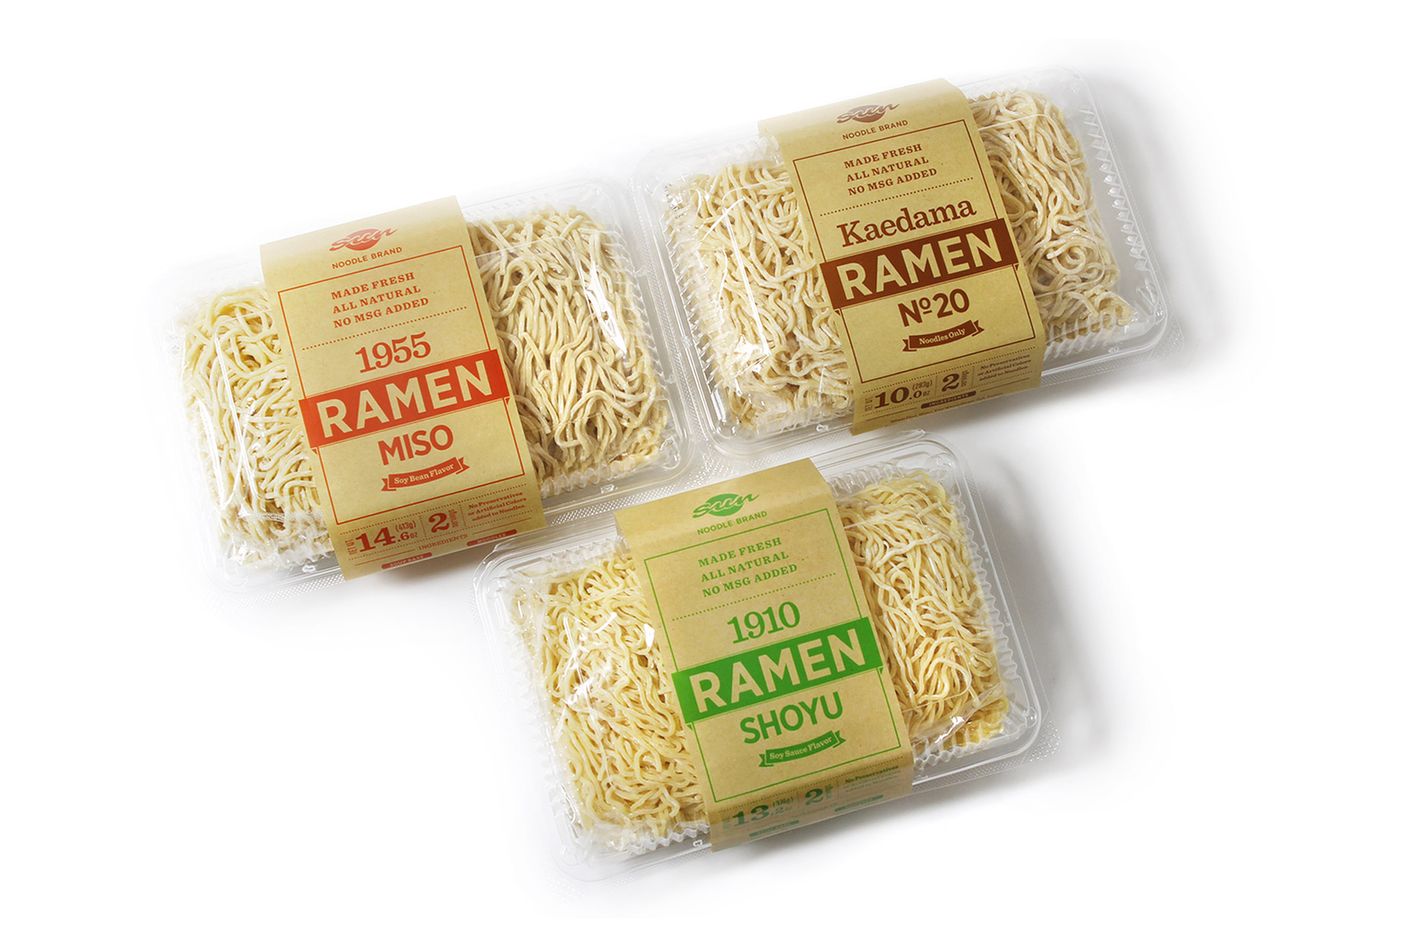 NO BRAND Ramen Noodle Snack x 2